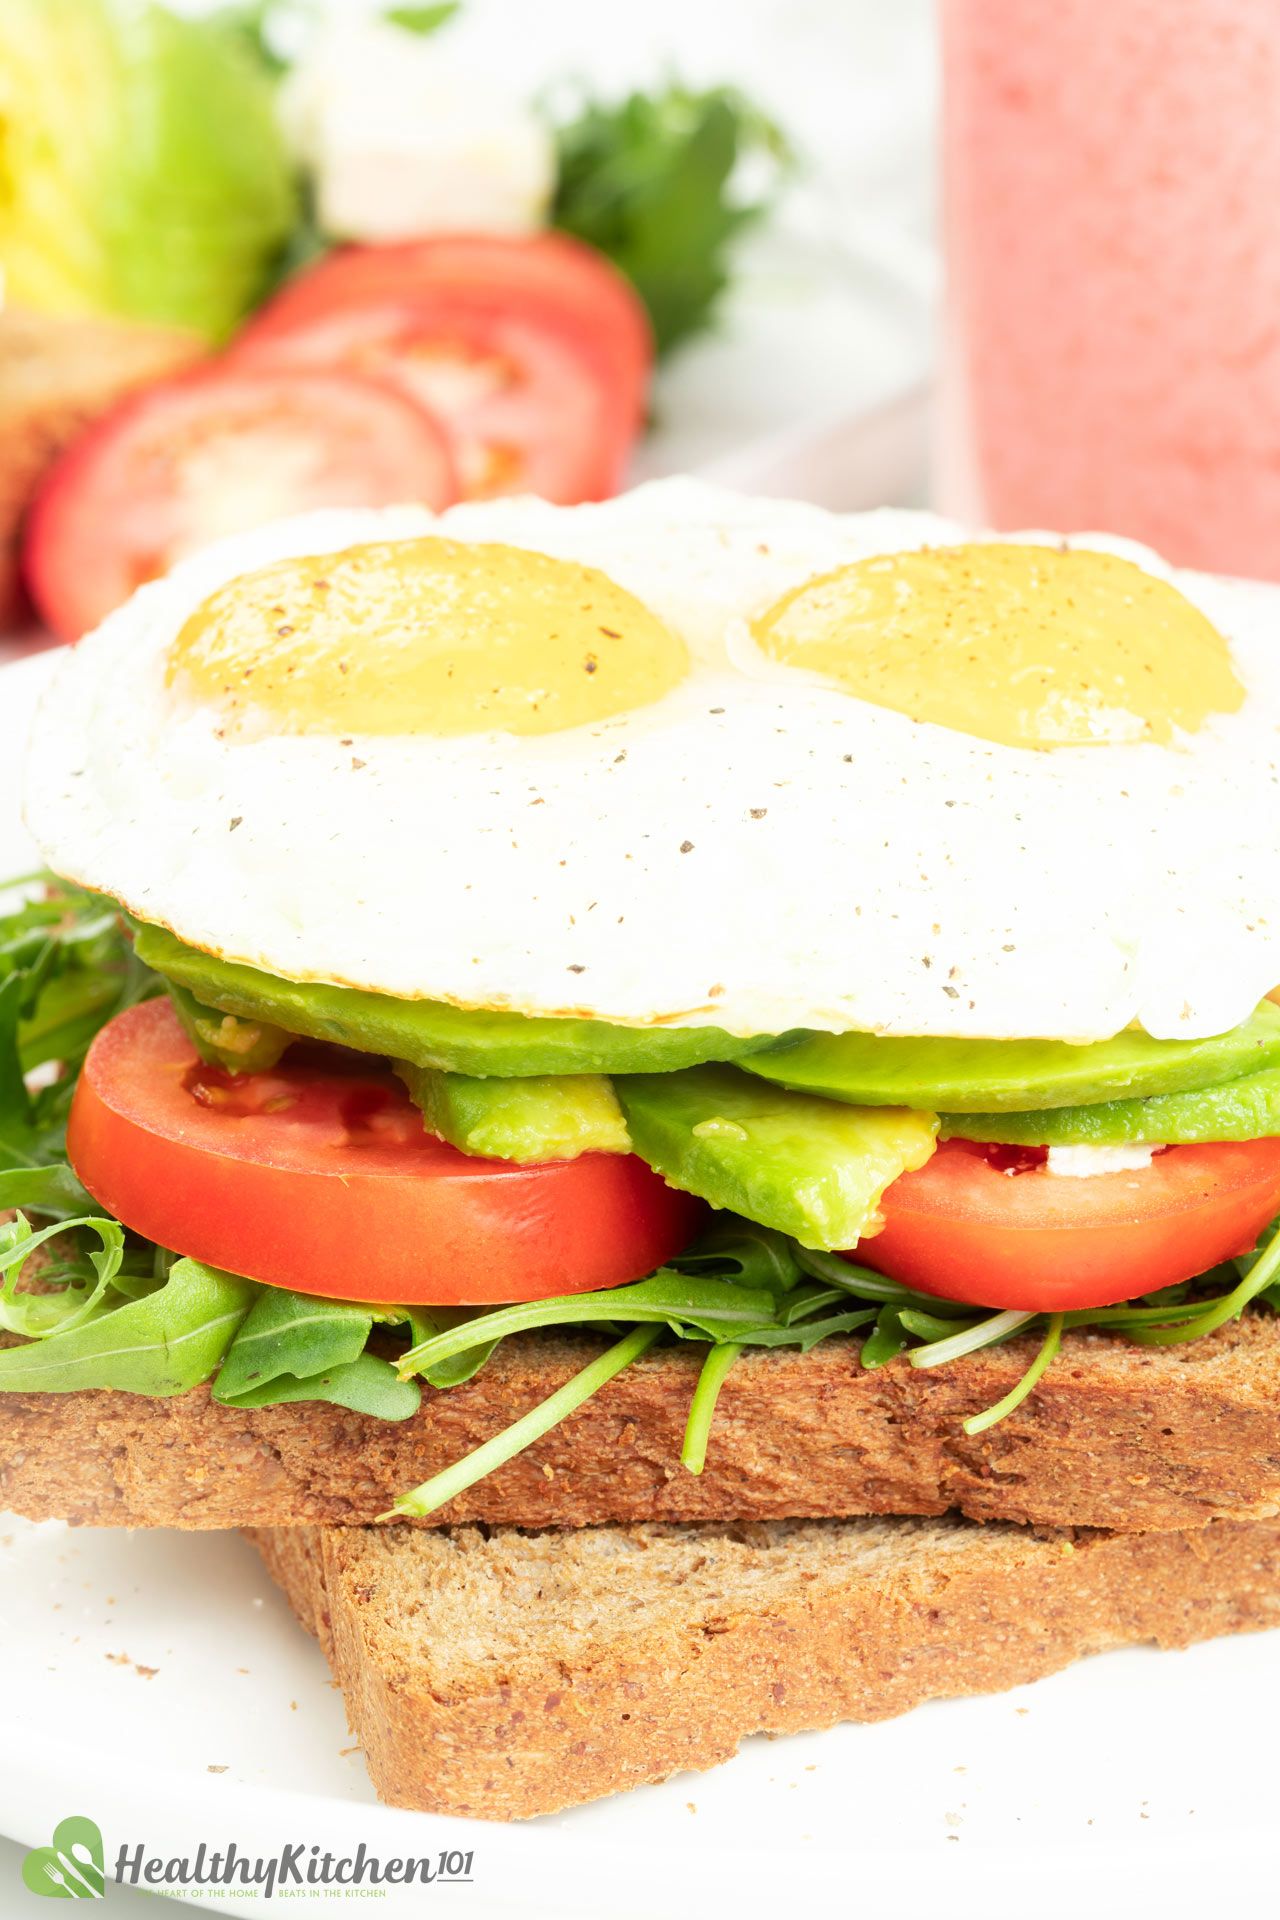 Tips for best Sunny Side Up Eggs